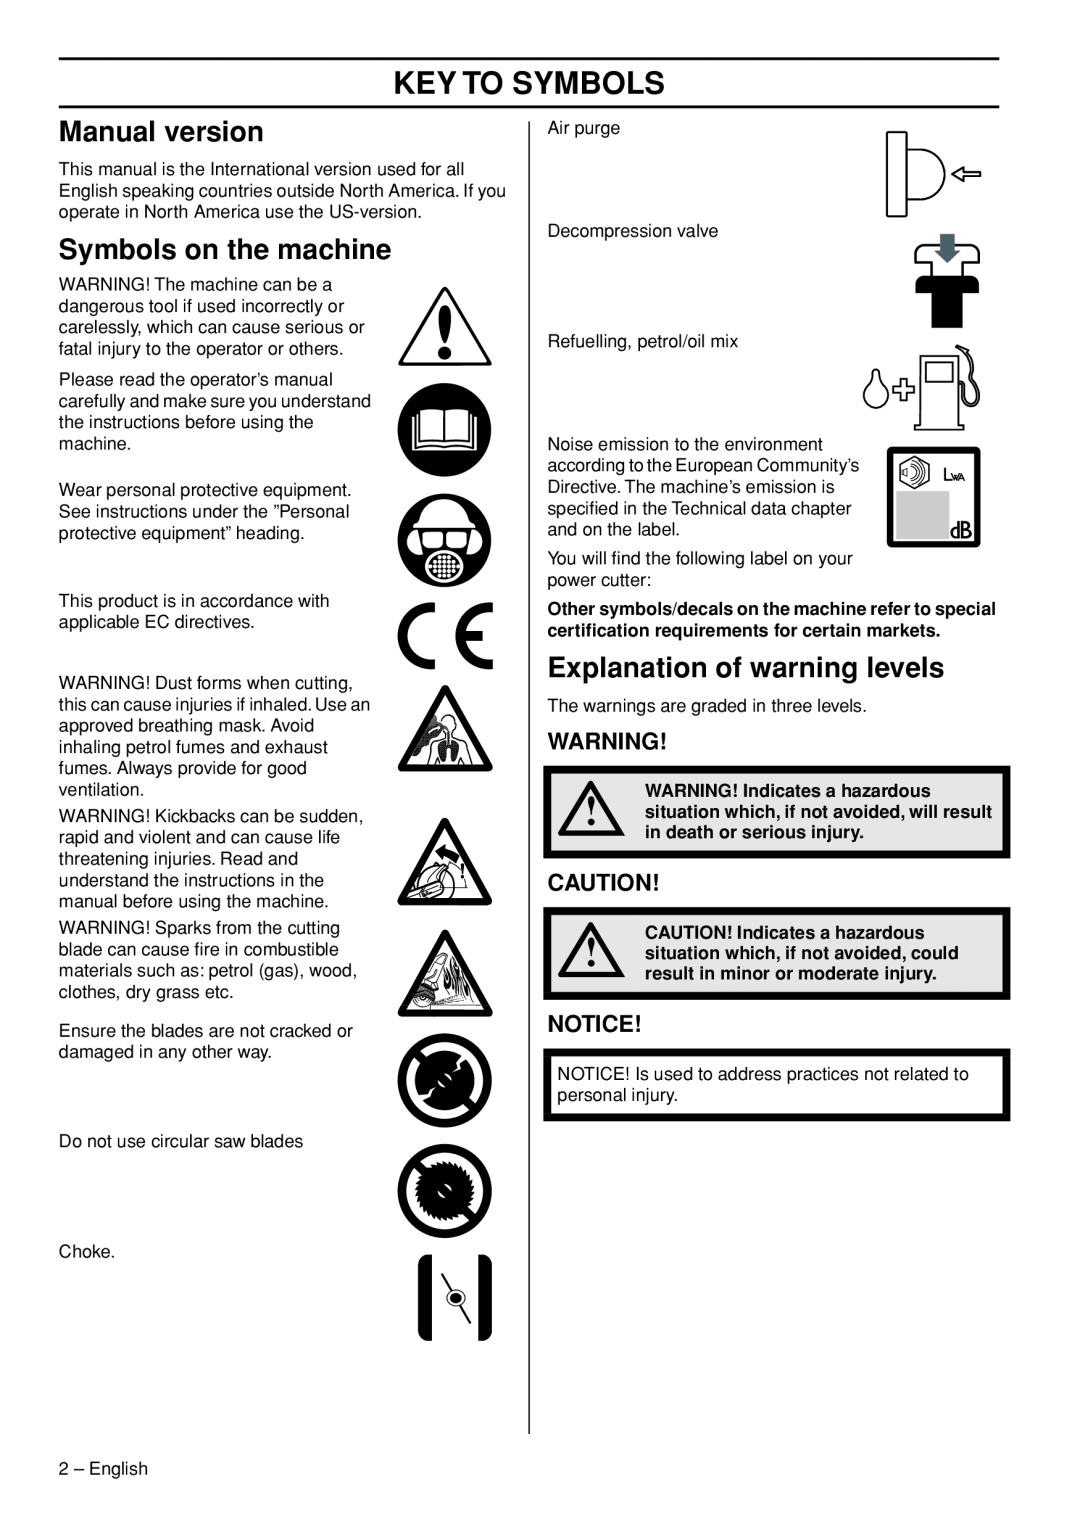 Husqvarna K760 Rescue manual Key To Symbols, Manual version, Symbols on the machine, Explanation of warning levels, Notice 